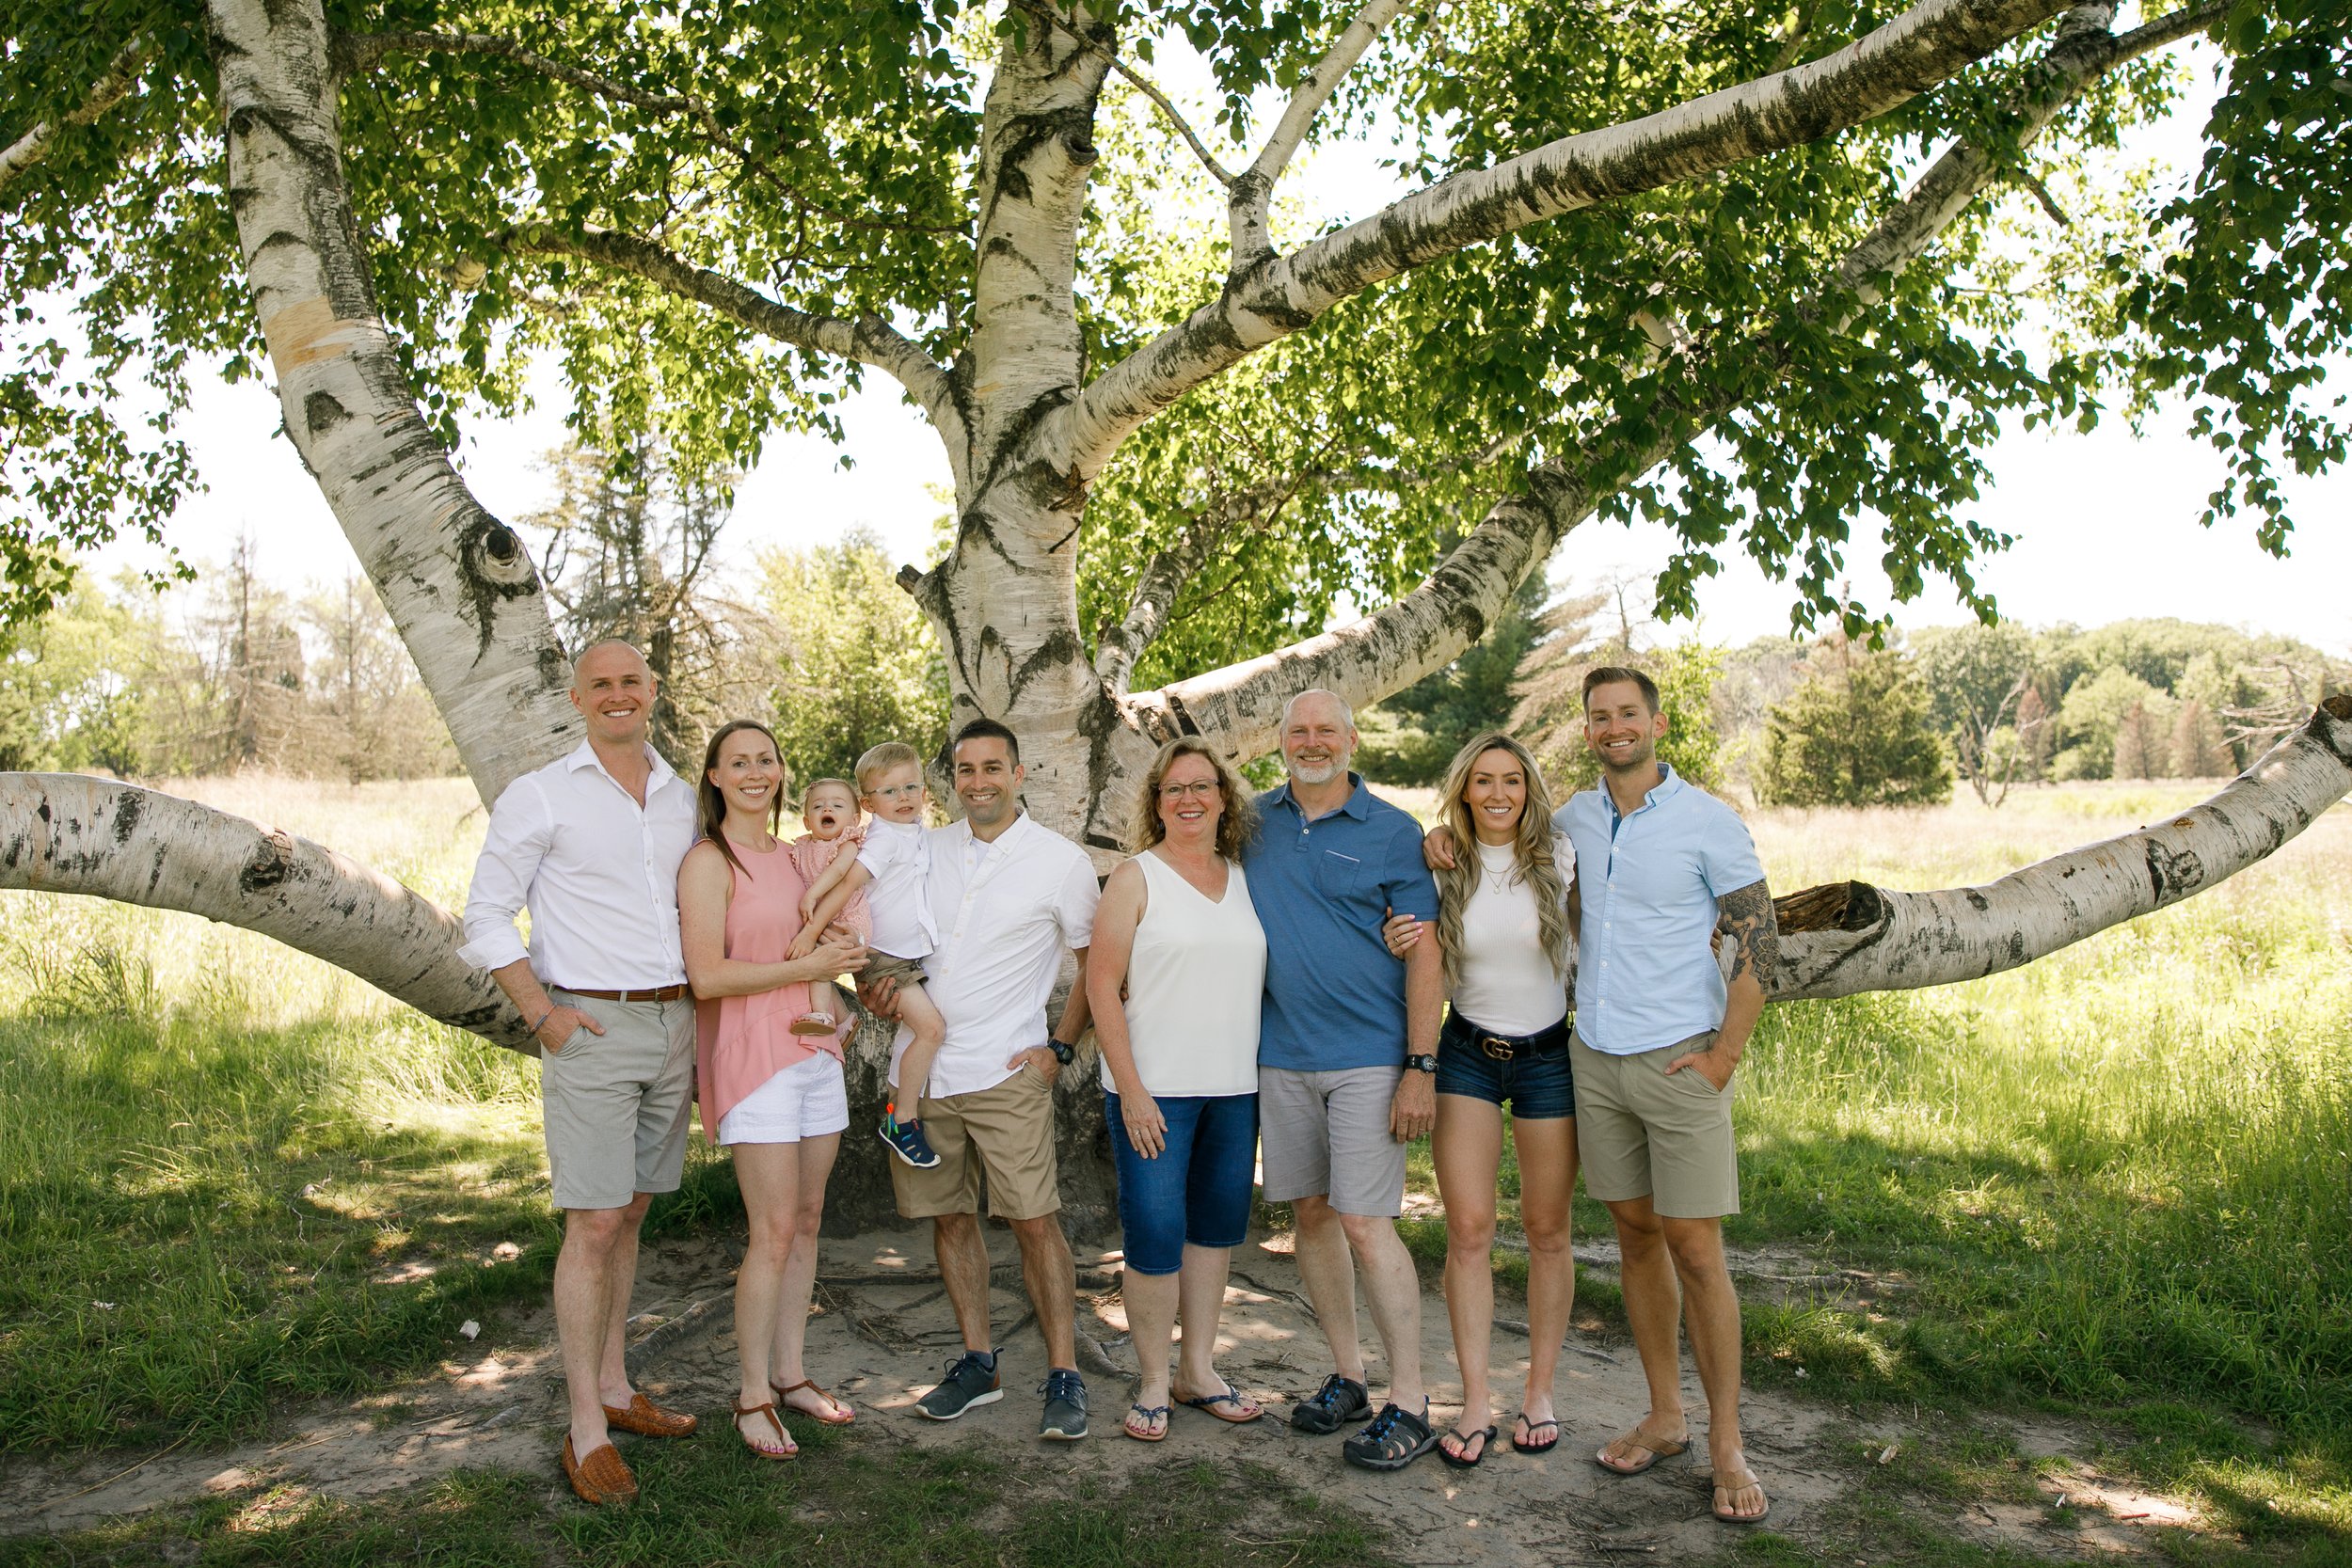 Grand Rapids Family Photographer - Extended Family Photographer - Ada Family Photographer - Lifestyle Family Photographer - Schoen Family - The Highlands  - J Darling Photo 01.jpg